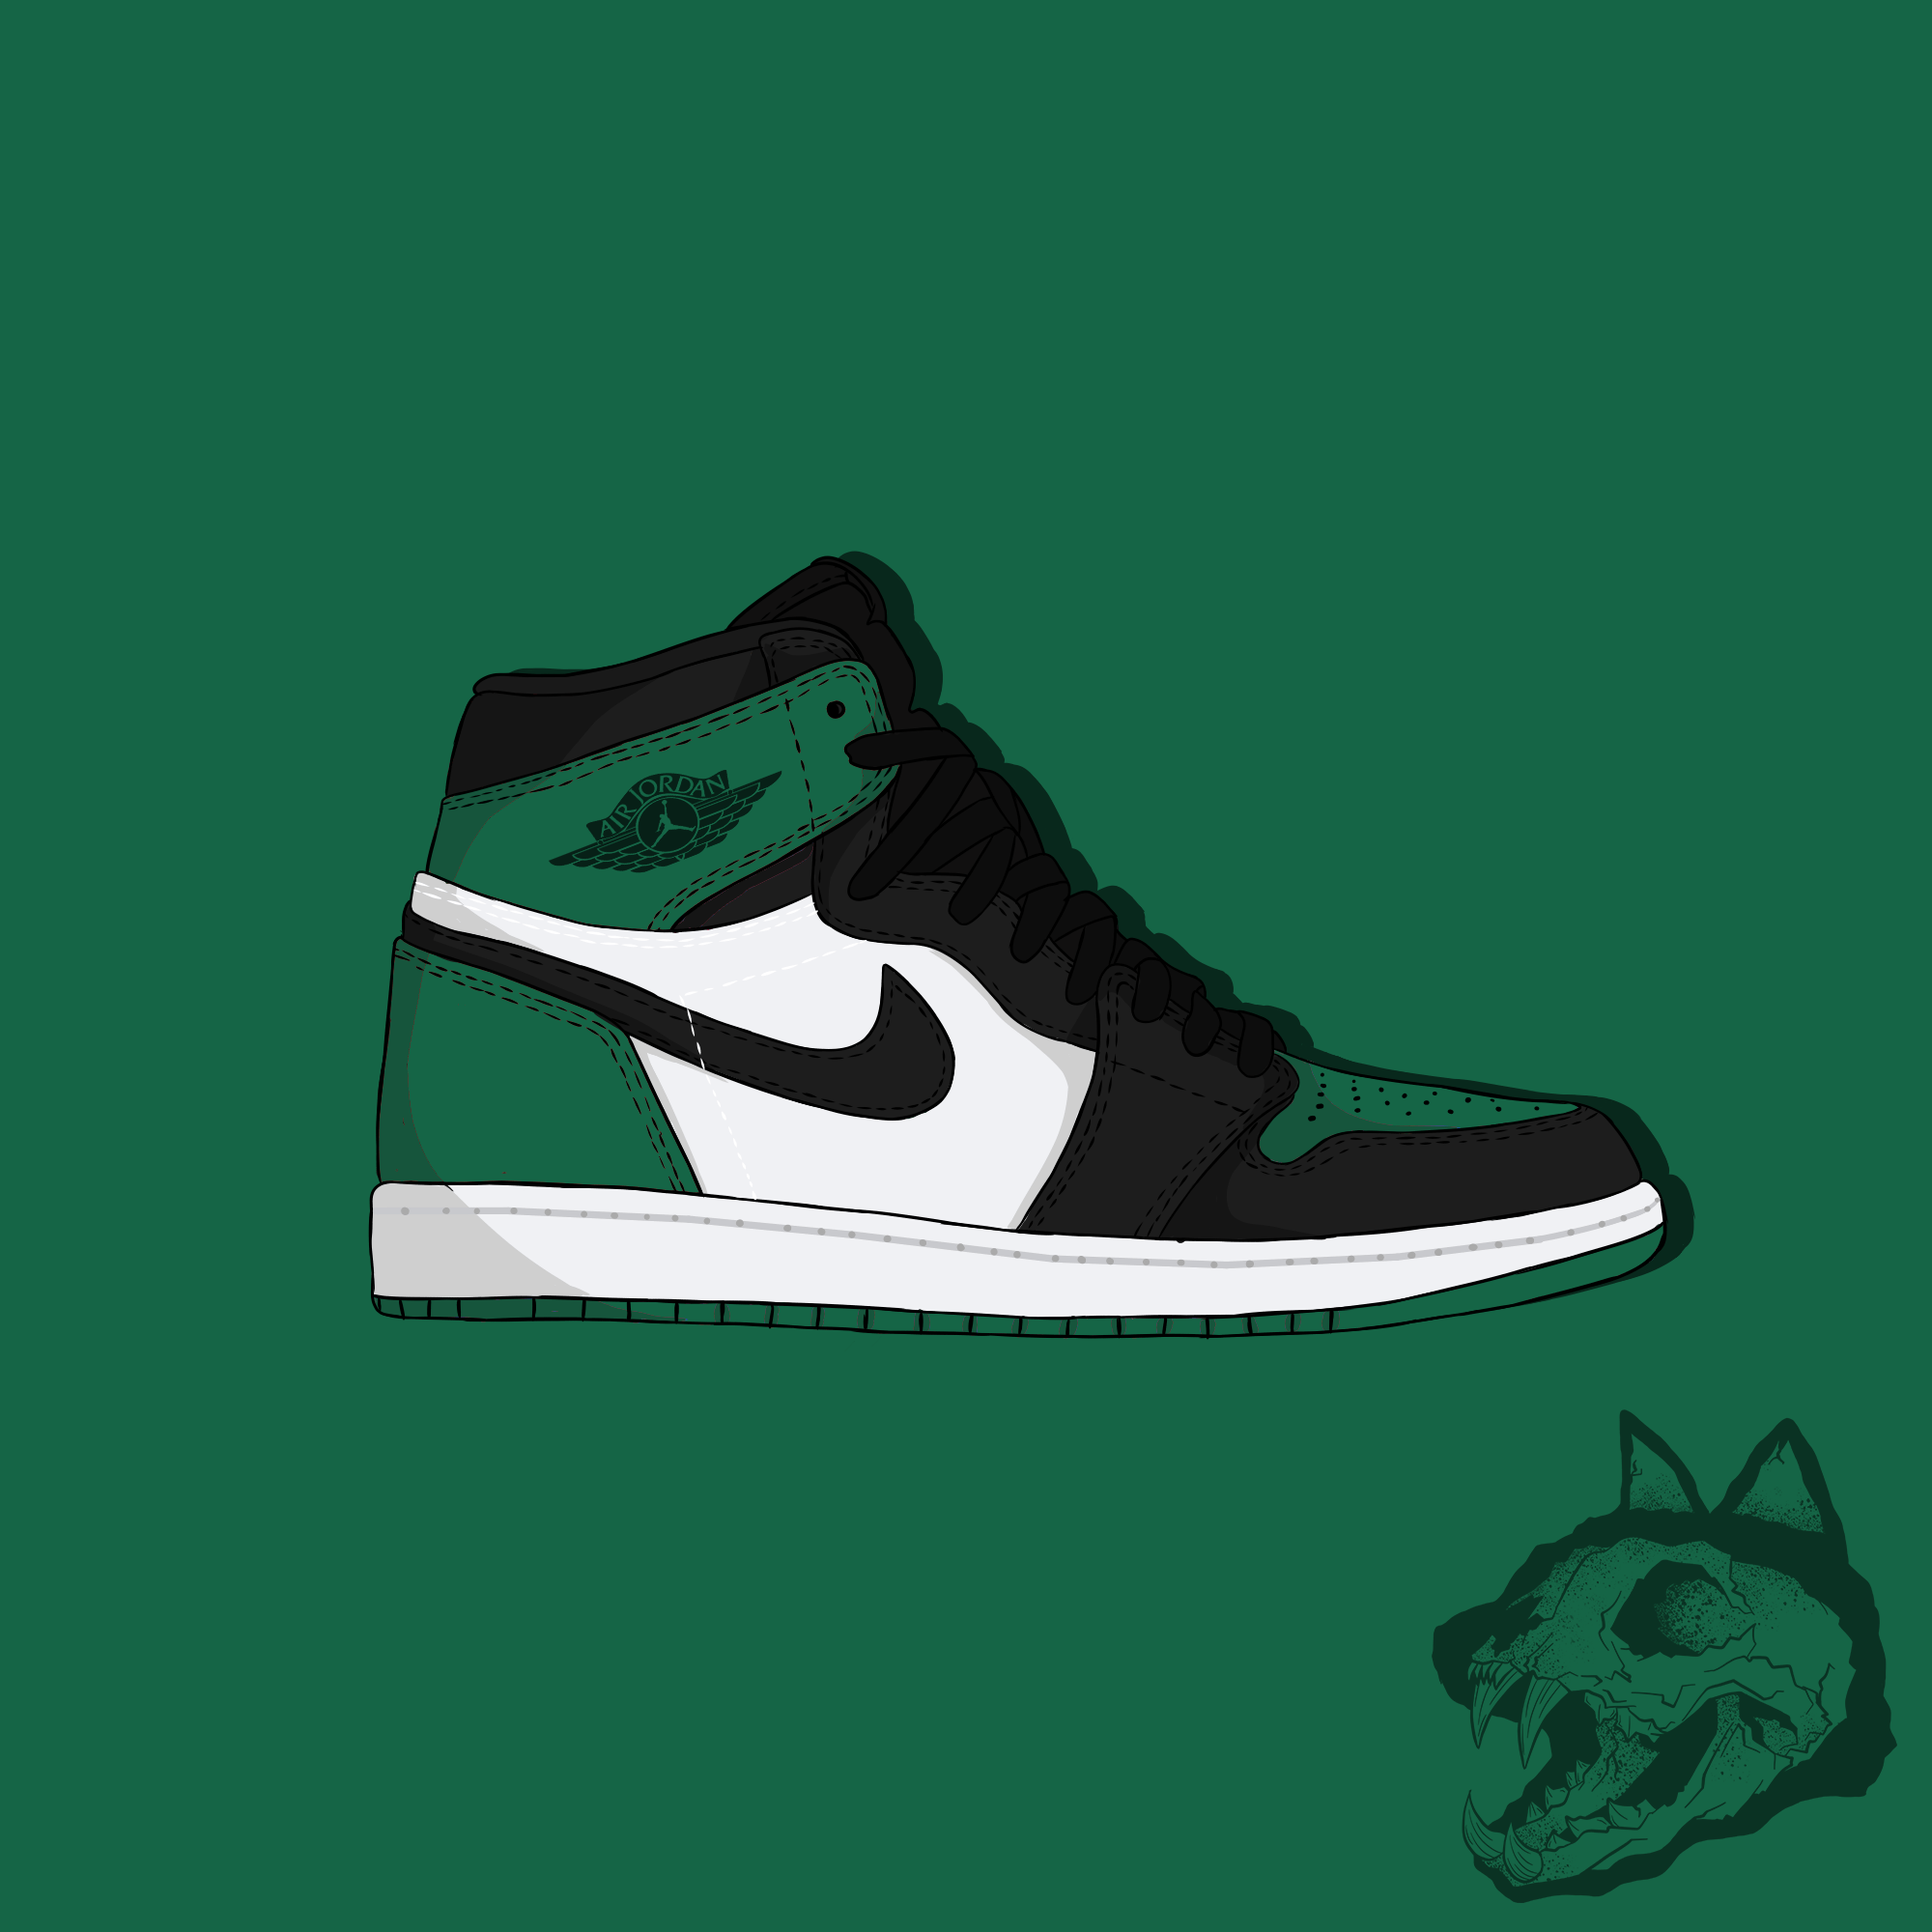 Green Jordan Wallpapers Top Free Green Jordan Backgrounds